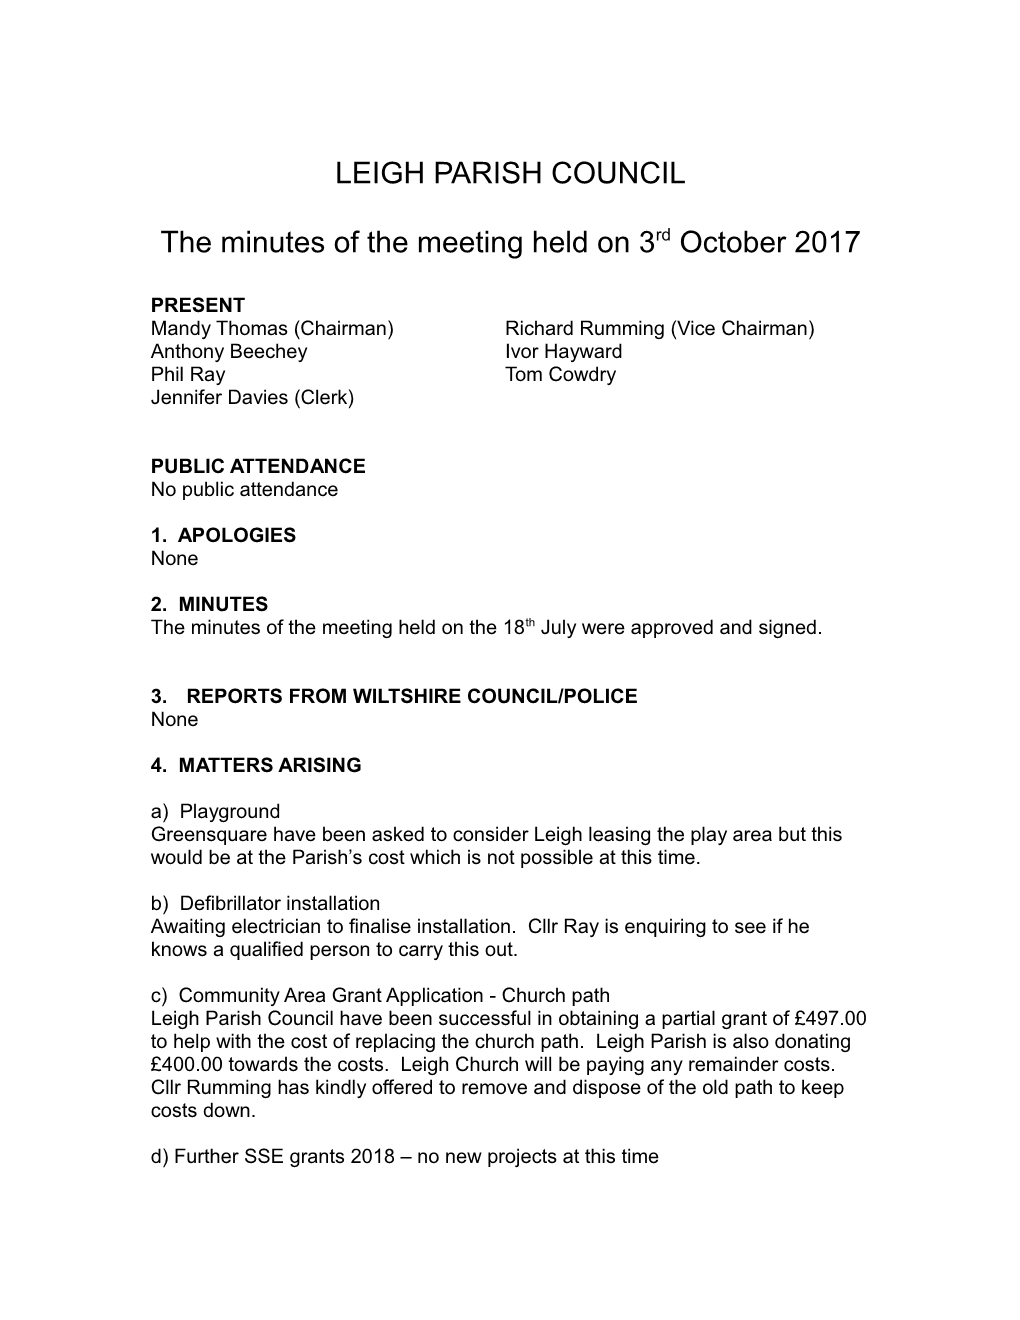 Leigh Parish Council s8